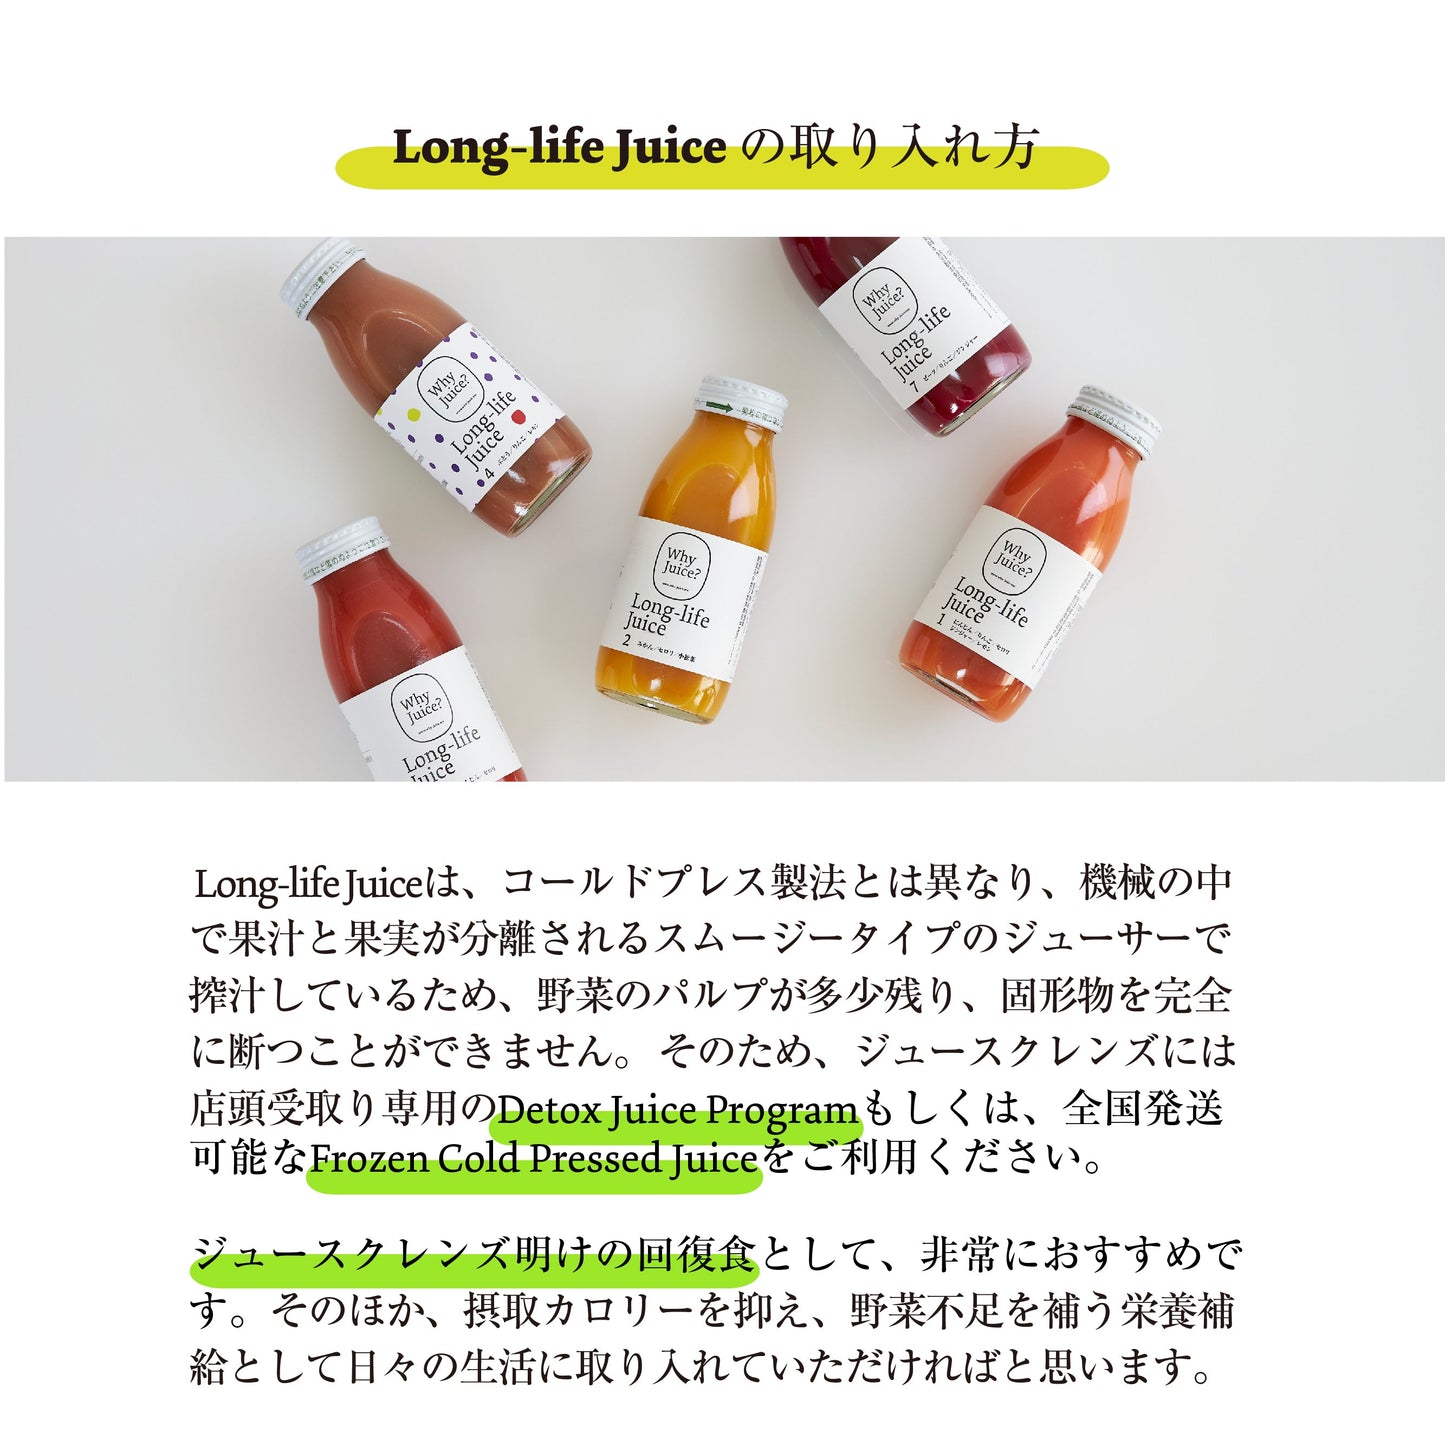 Long-life Juice：3種類ミックス (20本入)